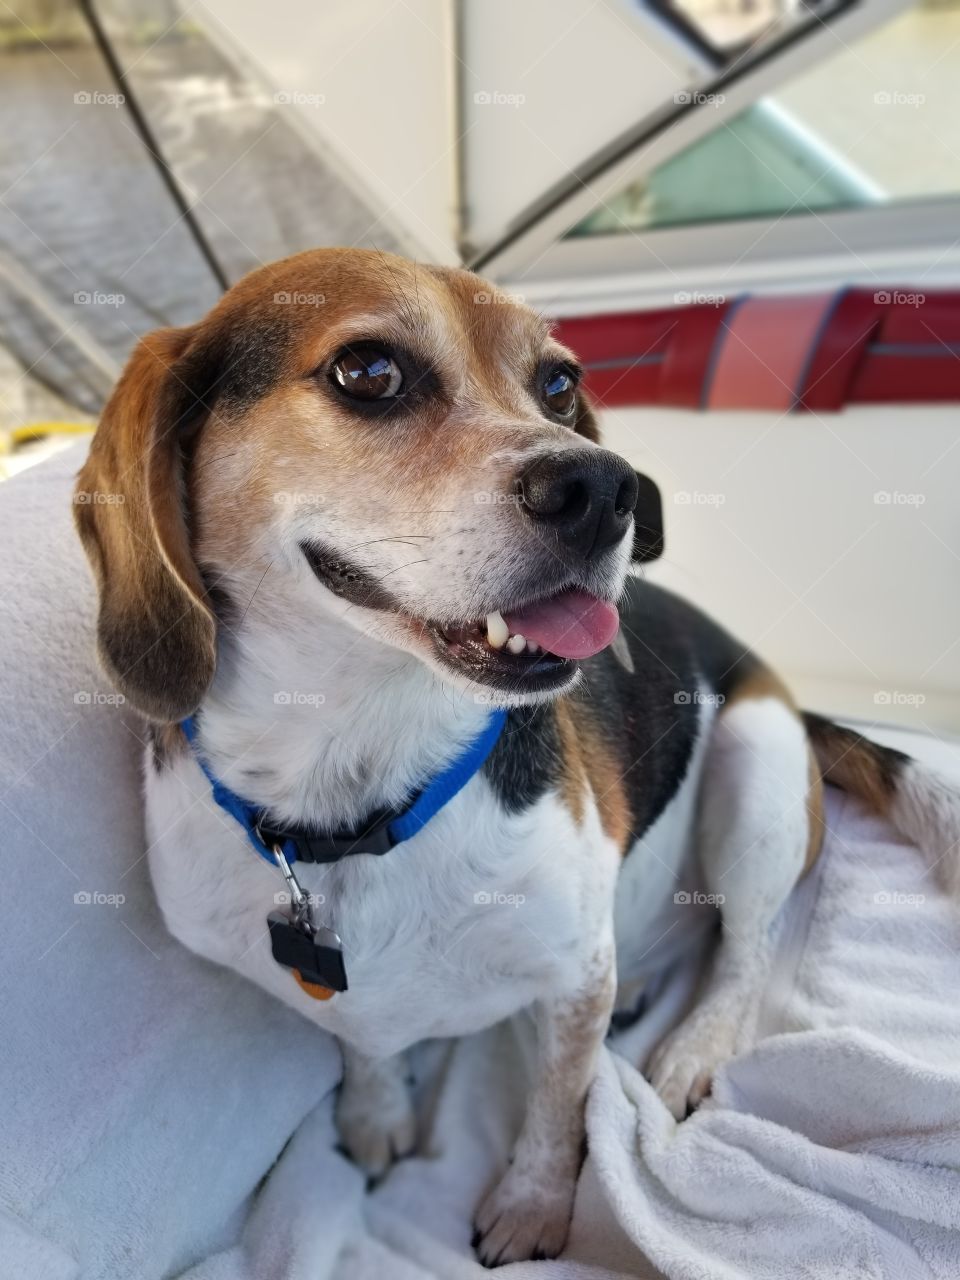 beagle on a boat seat. close up.